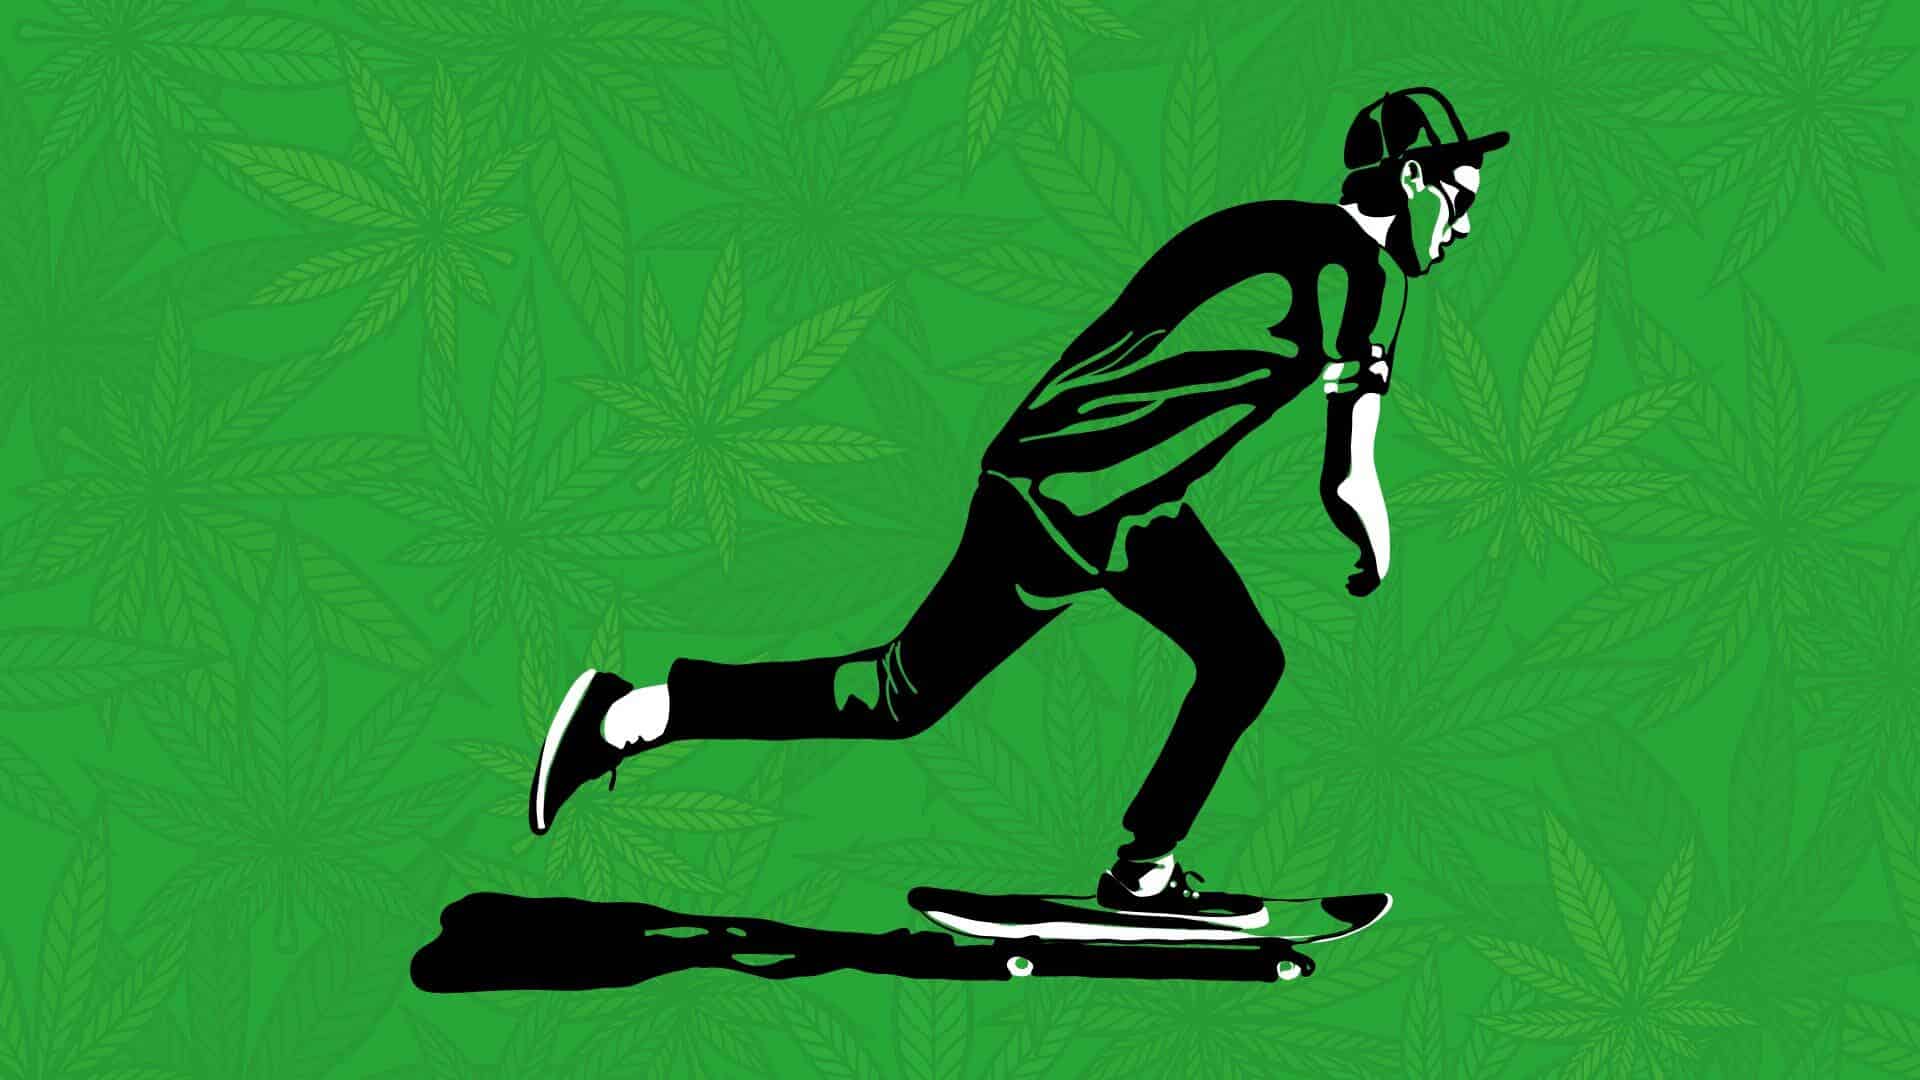 cannabis and skate culture